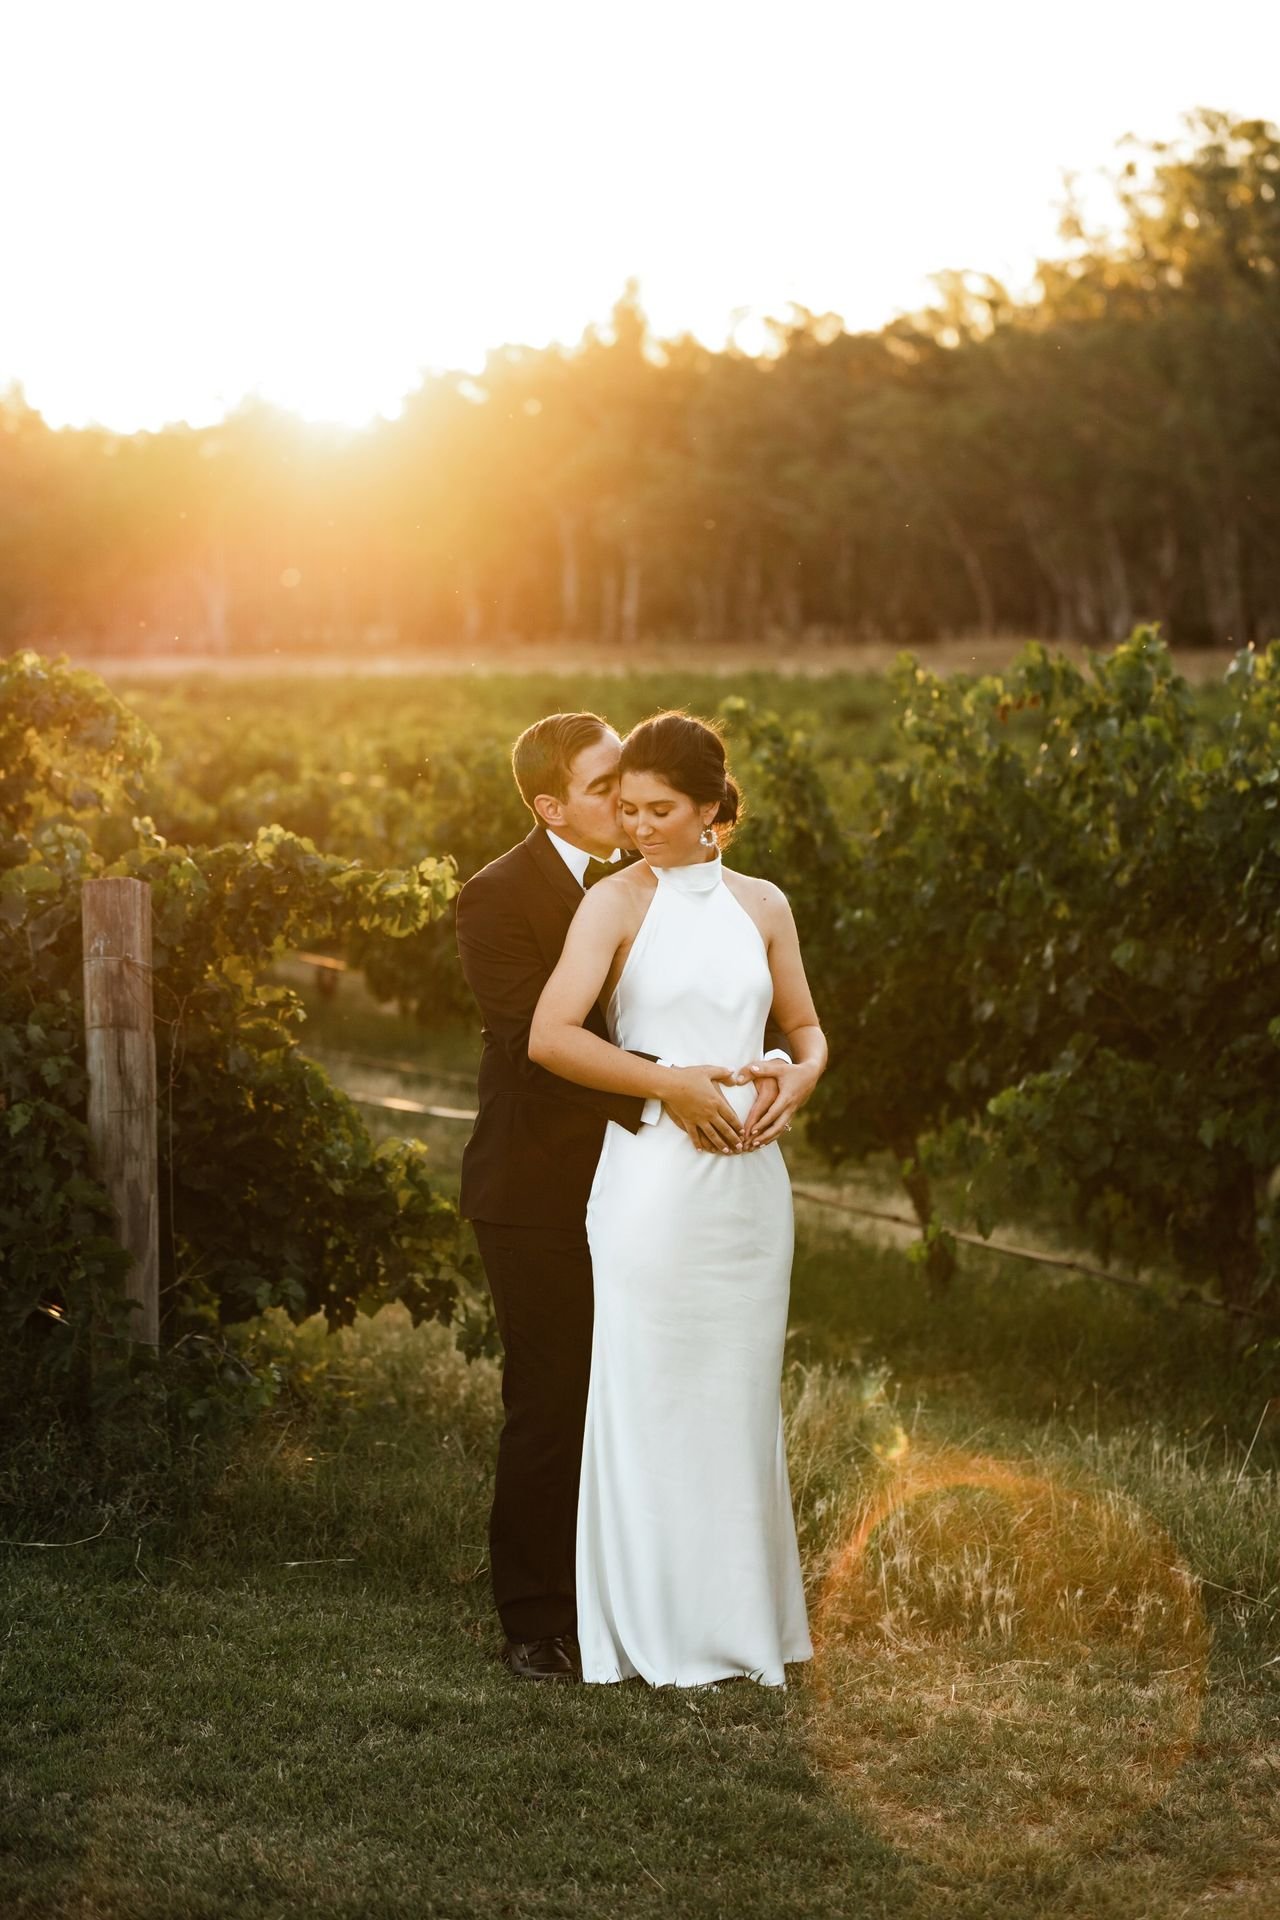 Rutherglen+Wedding+at+St+Leonards+Winery-42-1280w.jpg